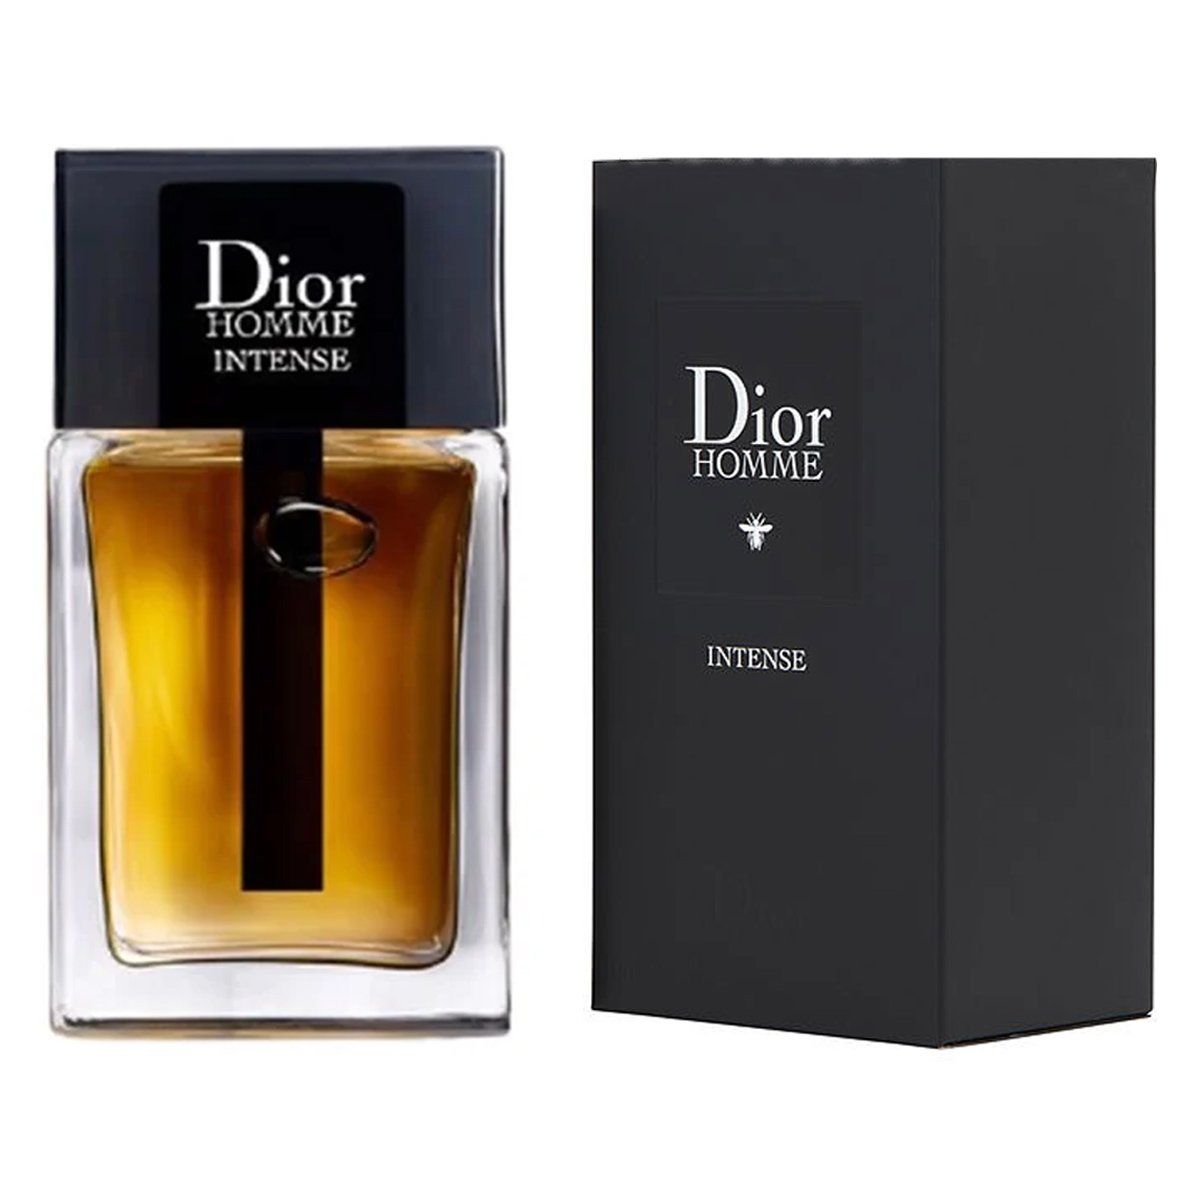 Dior homme intense  Hoa cho Anh  A perfumecatcher